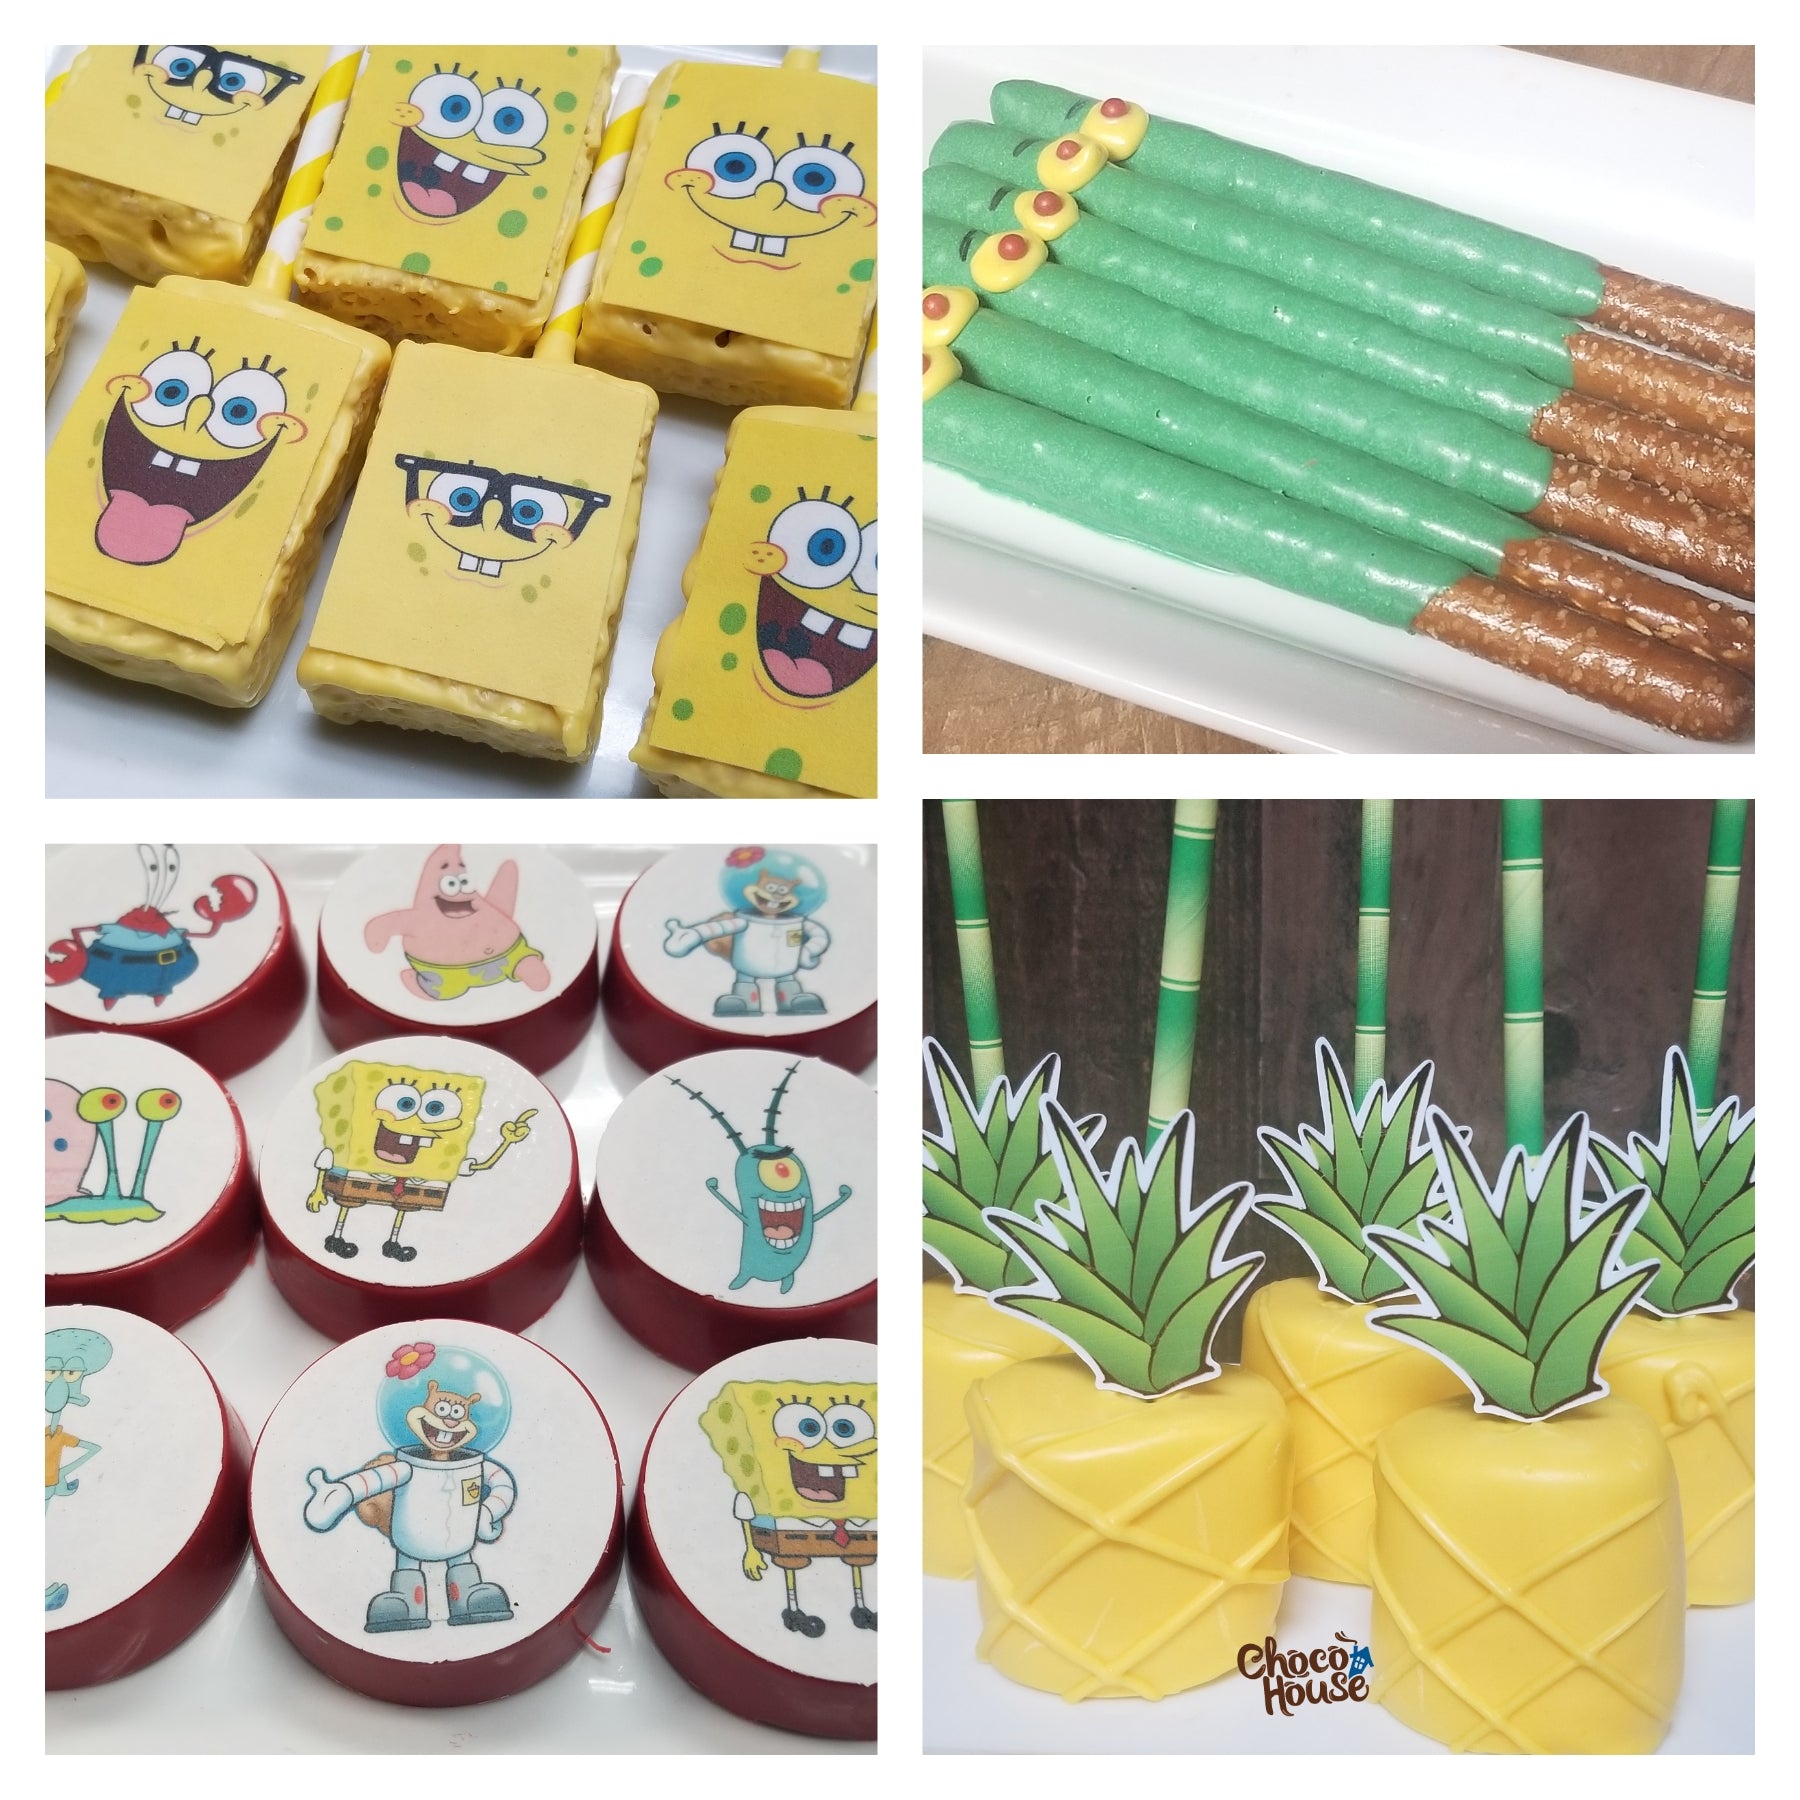 SpongeBob SquarePants Inspired theme treats. 48 Piece Treats